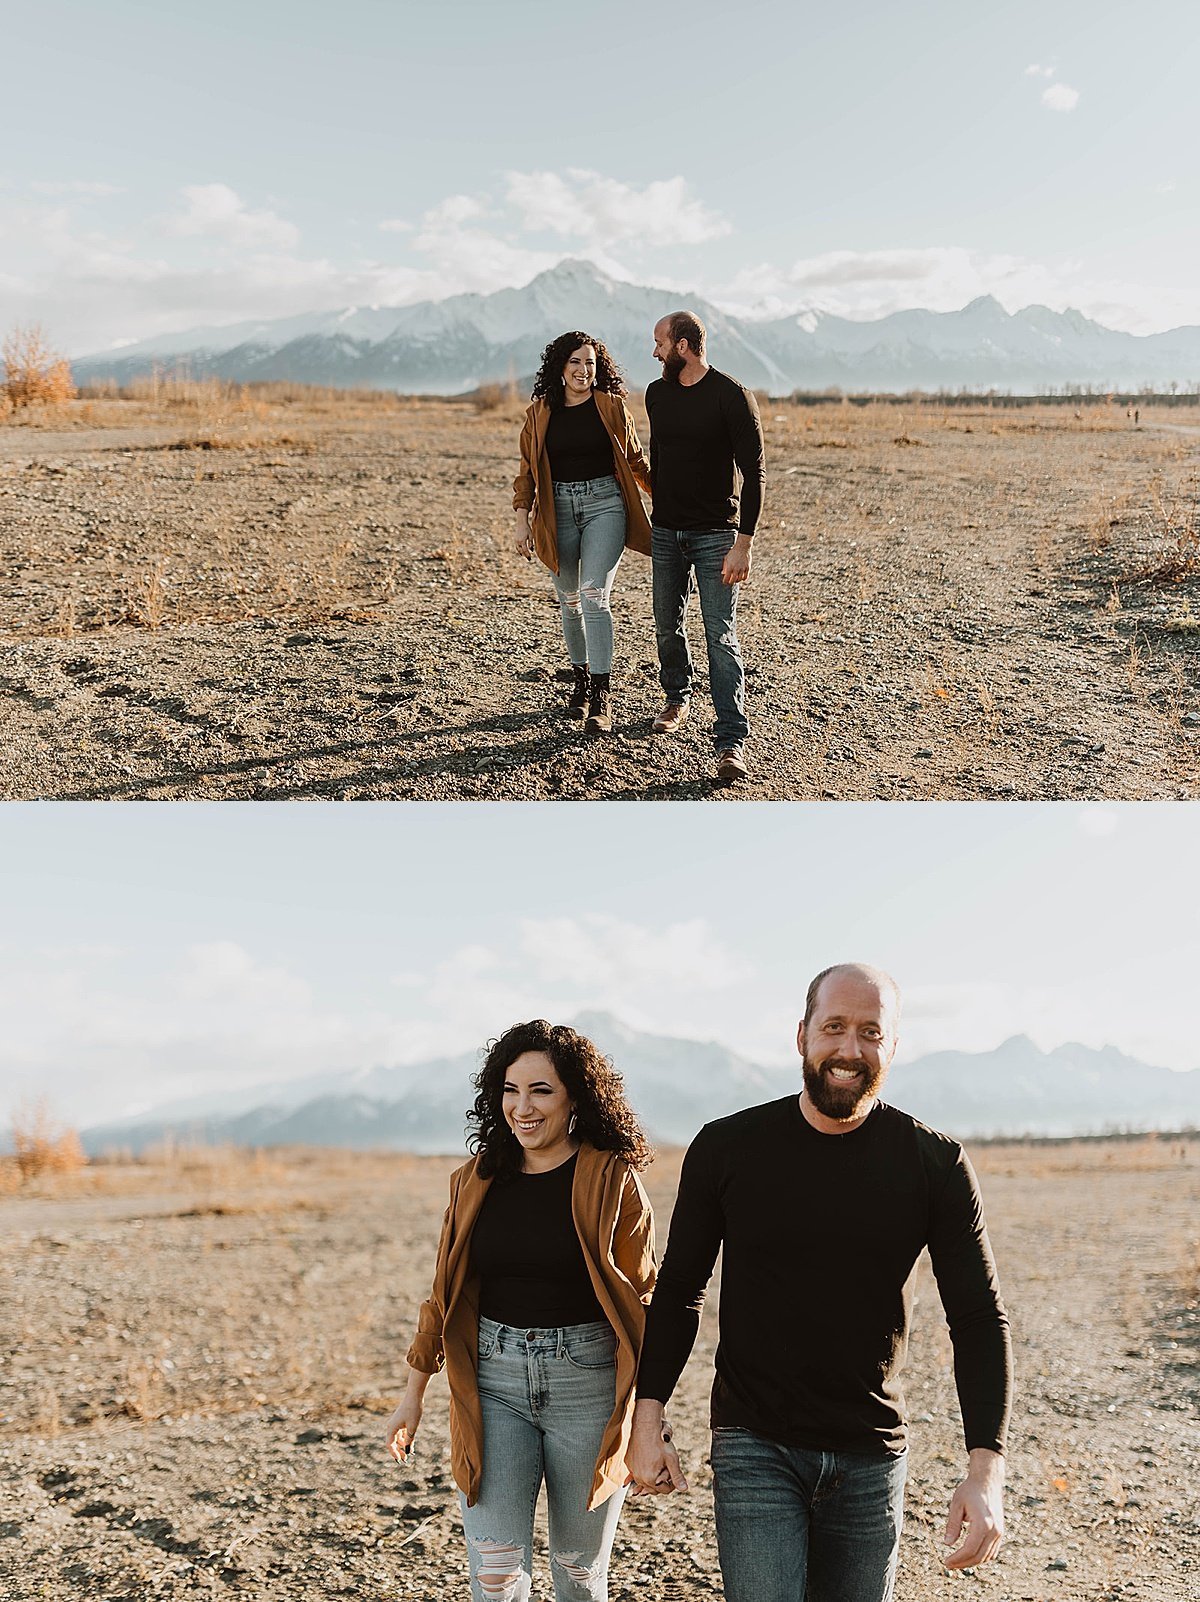  Outdoorsy couple walk through mountain landscape in engagement shoot by Alaska wedding photographer 